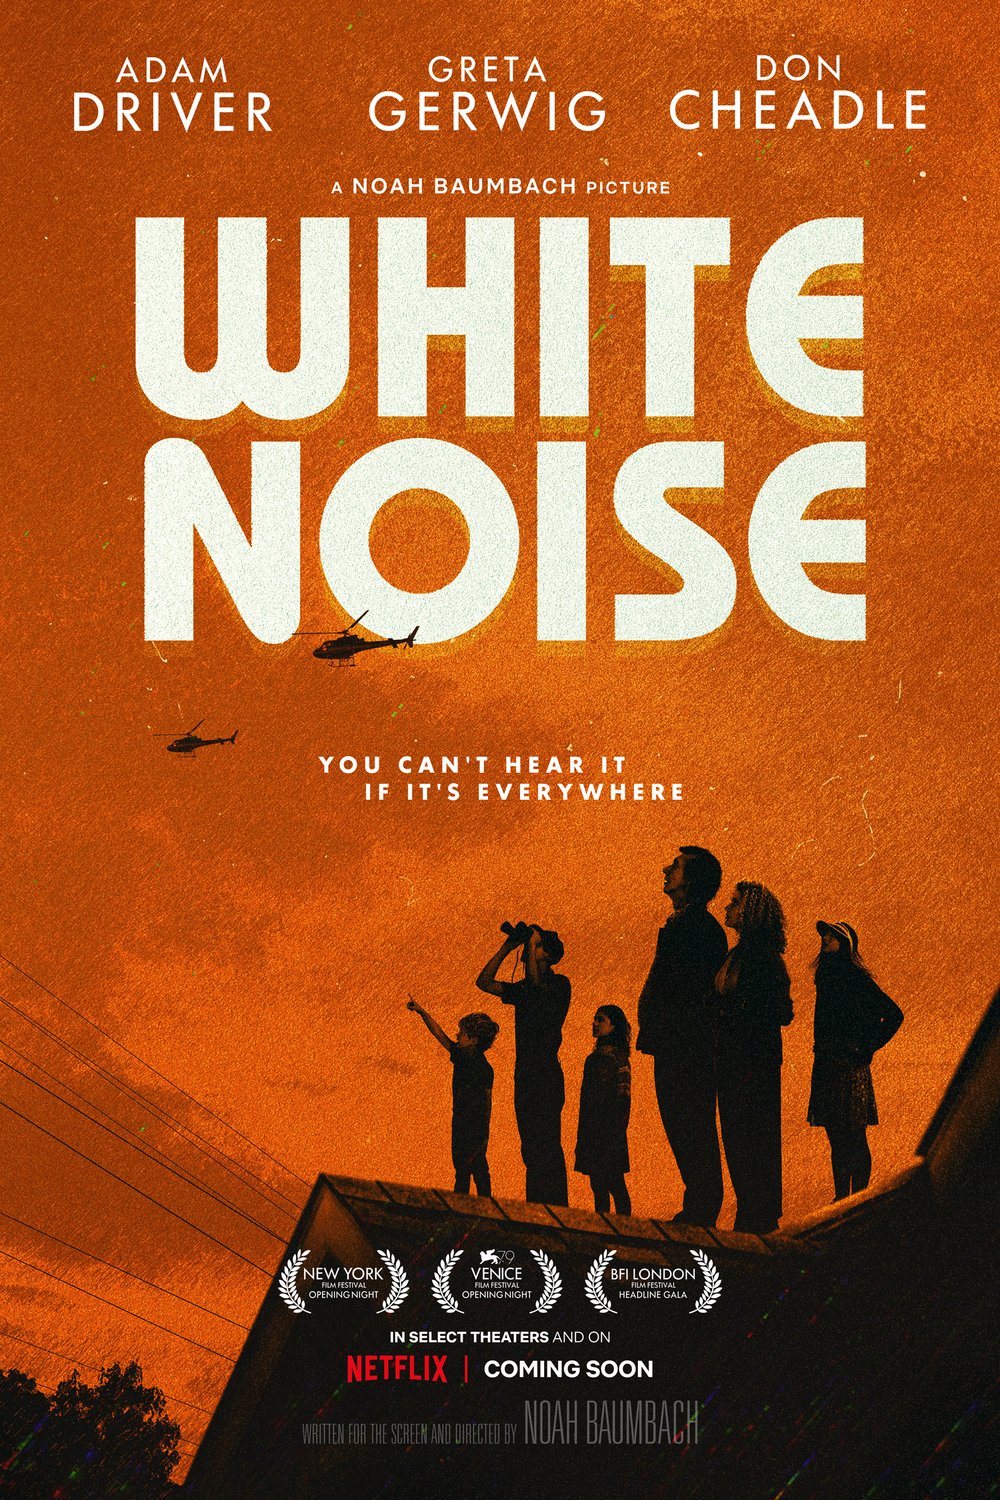 L'affiche du film White Noise